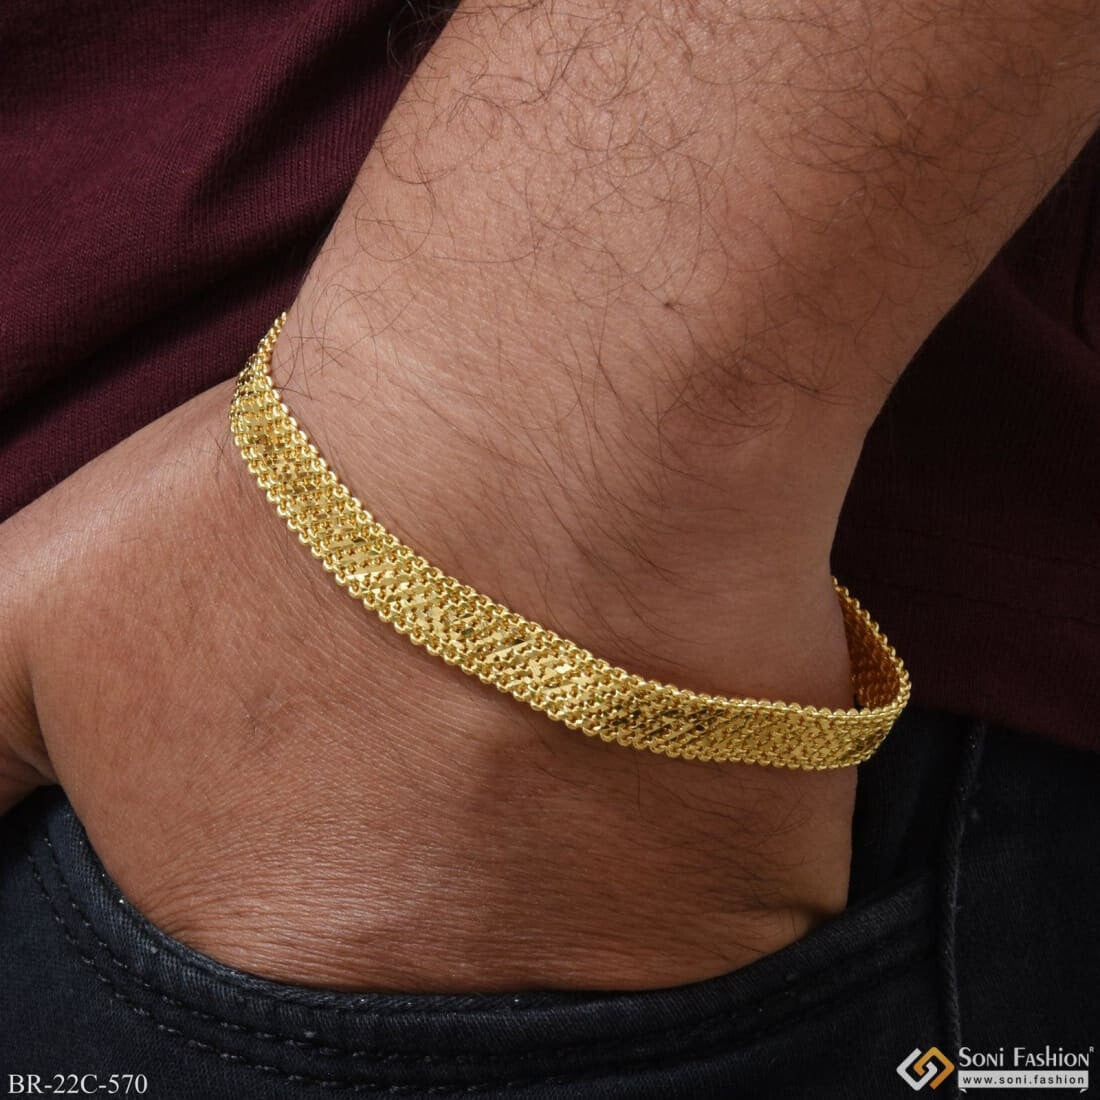 7mm Diamond Cut Franco Bracelet, 14k Gold Mens Bracelet, Solid Gold -  Proclamation